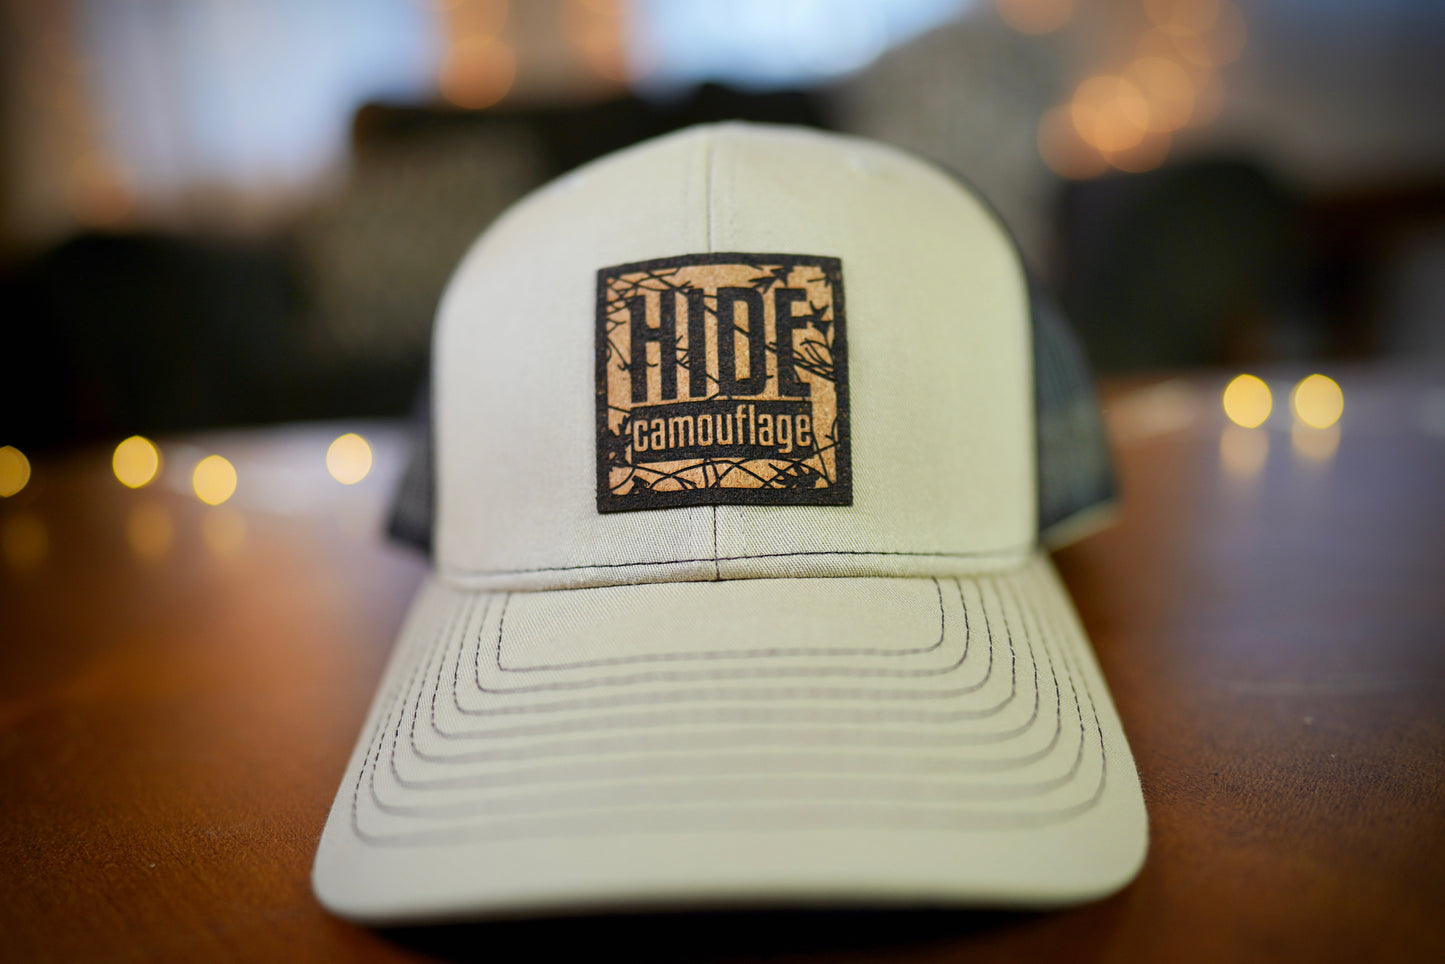 "Hide Camo Logo" Design Trucker Hat (Coffee Mesh/ Khaki Fabric)